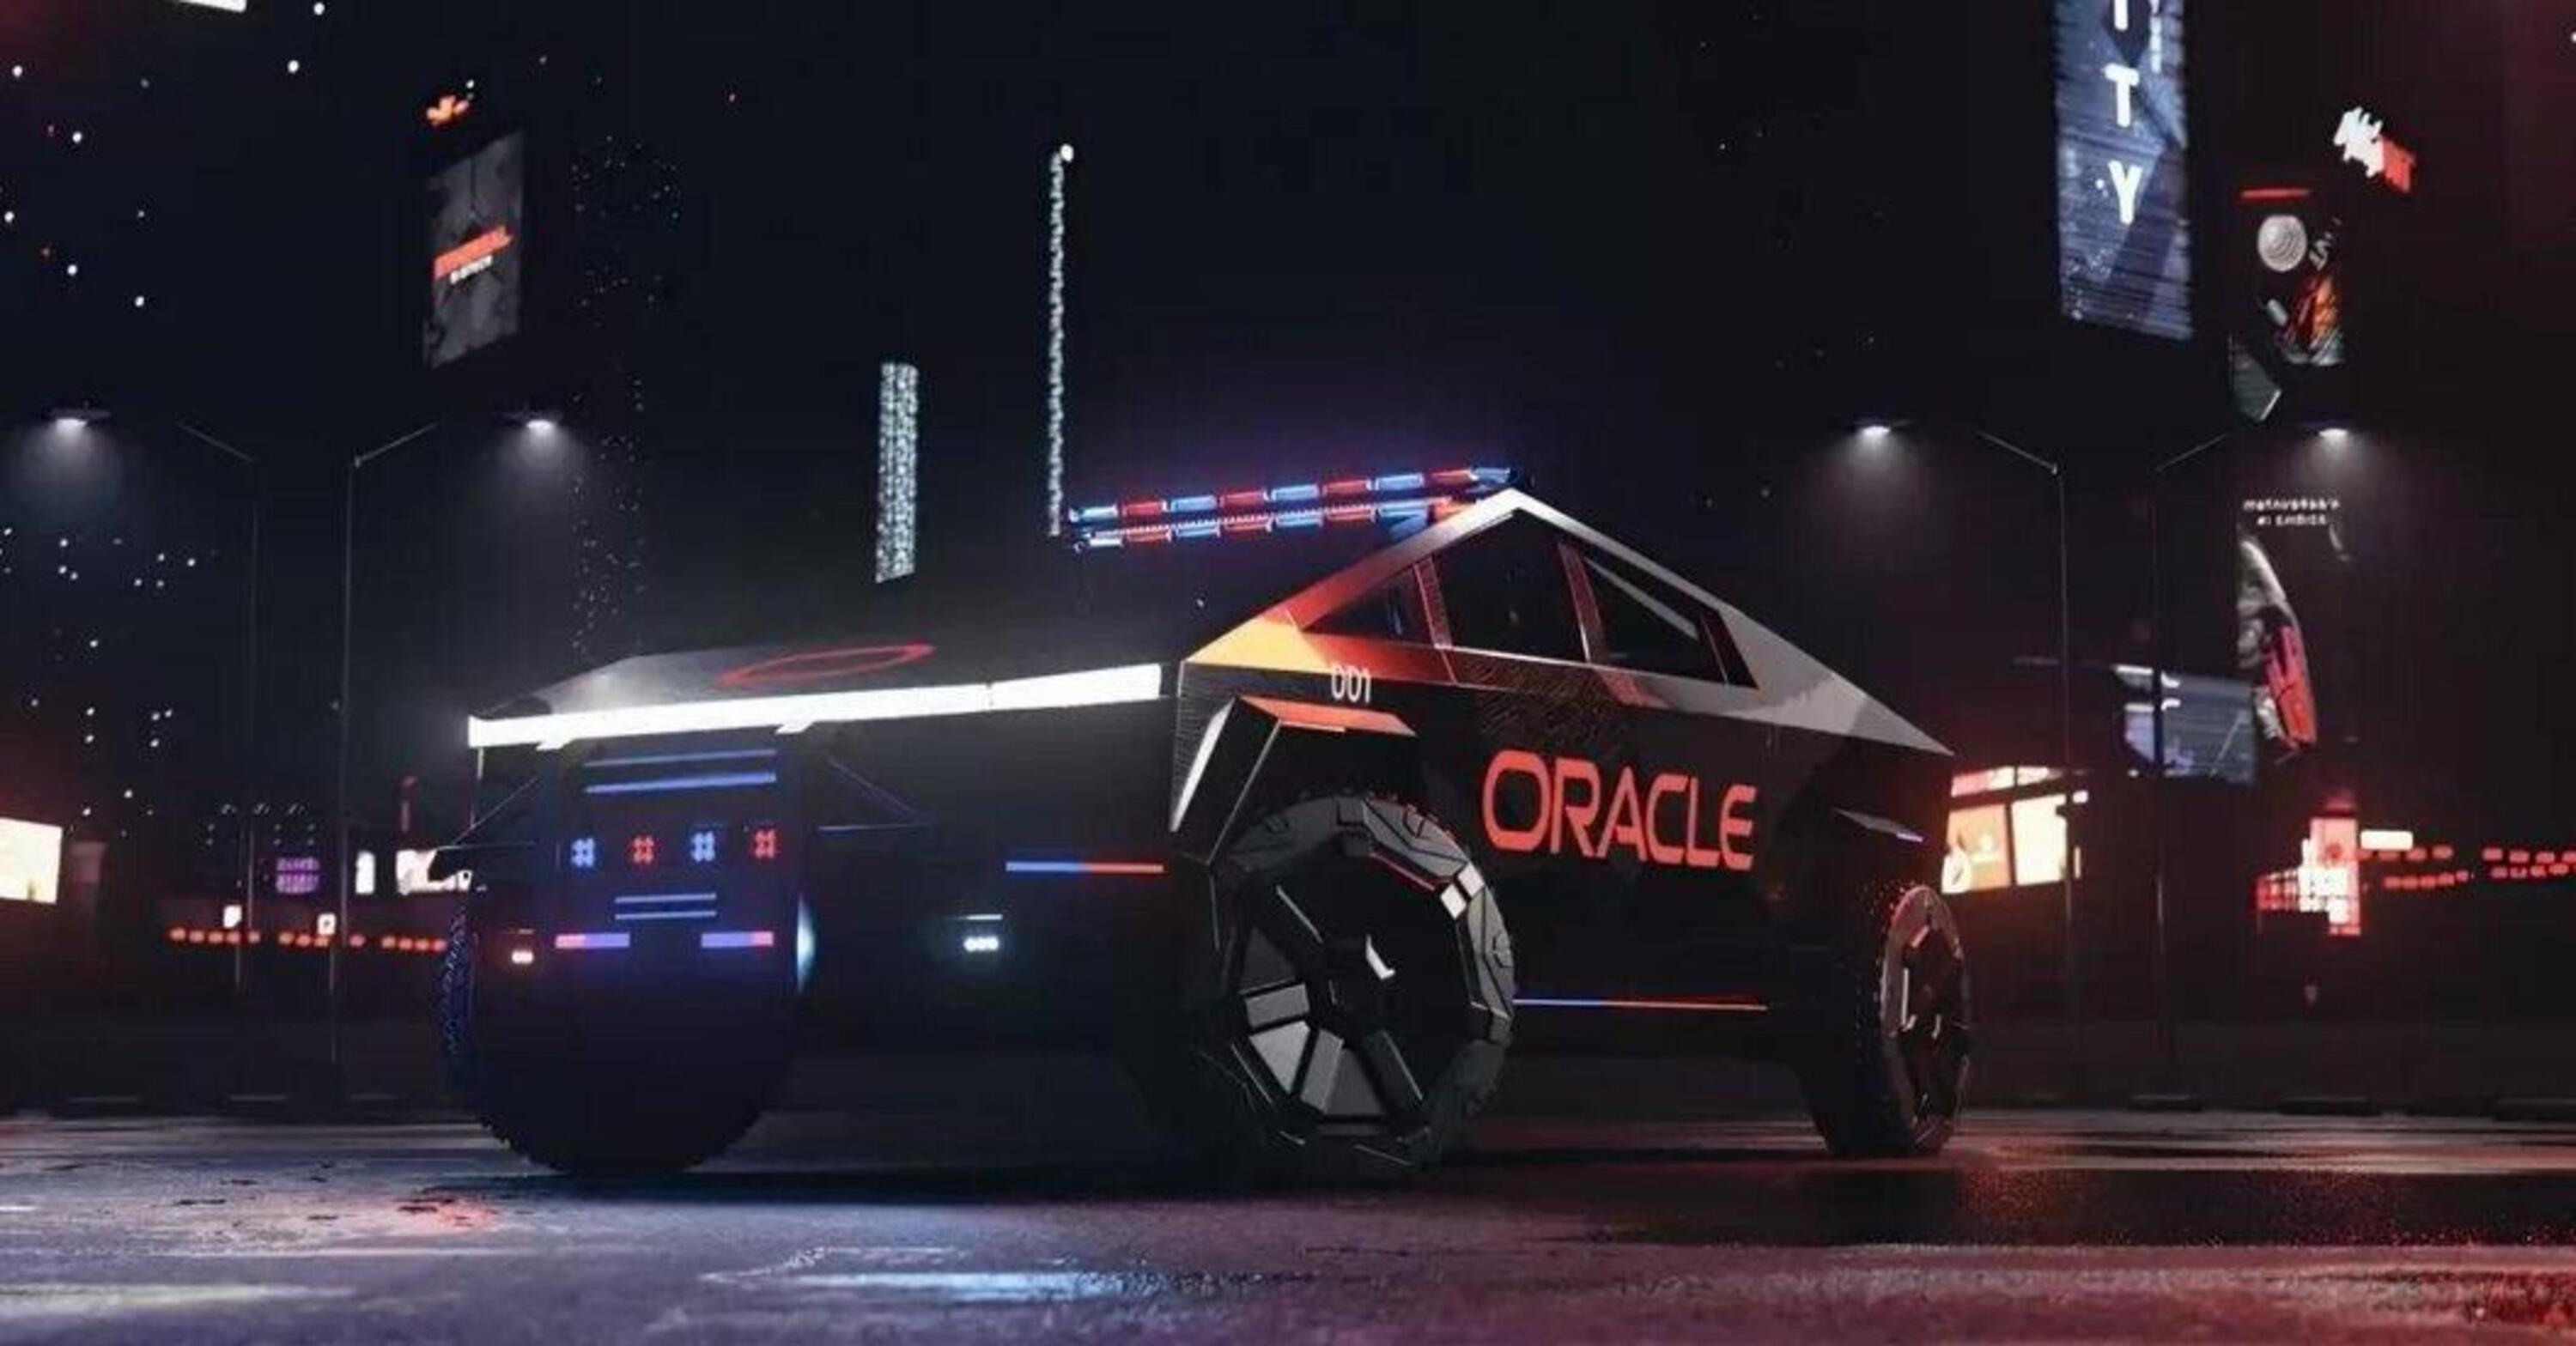 Tesla Cybertruck: gi&agrave; pronta la versione Polizia